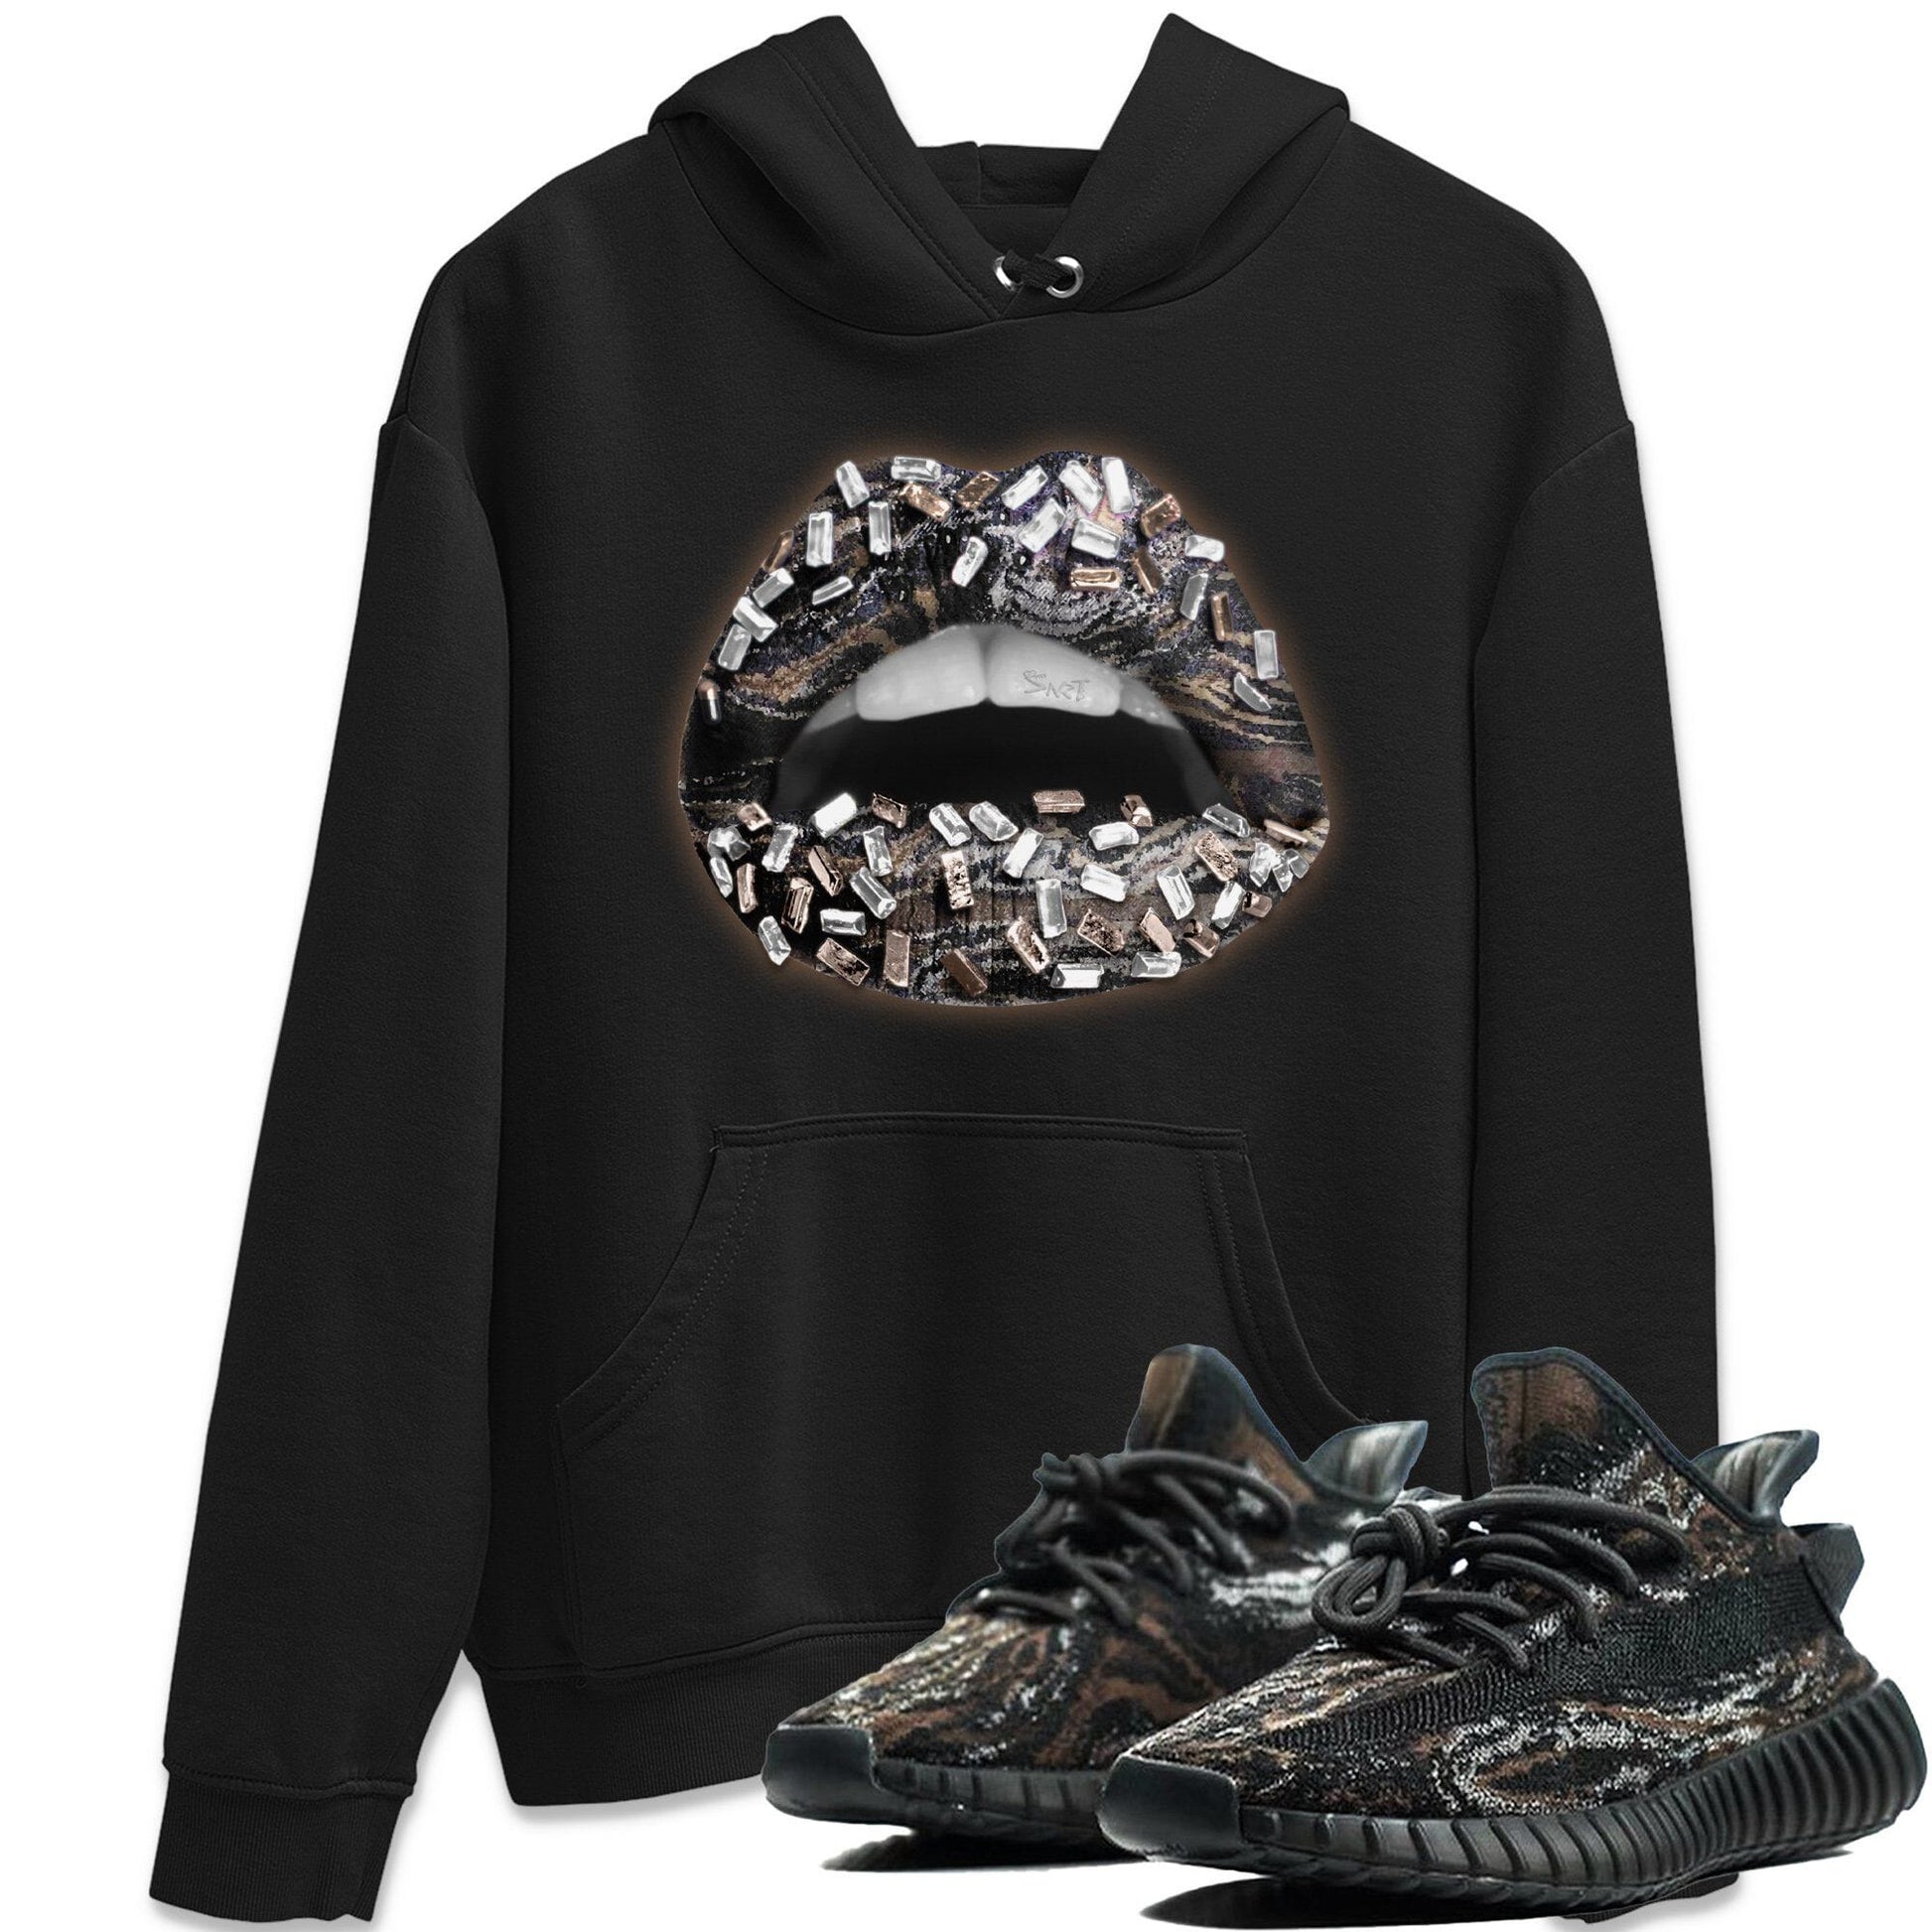 Yeezy 350 MX Rock Sneaker Match Tees Lips Jewel Sneaker Tees Yeezy 350 MX Rock Sneaker Release Tees Unisex Shirts